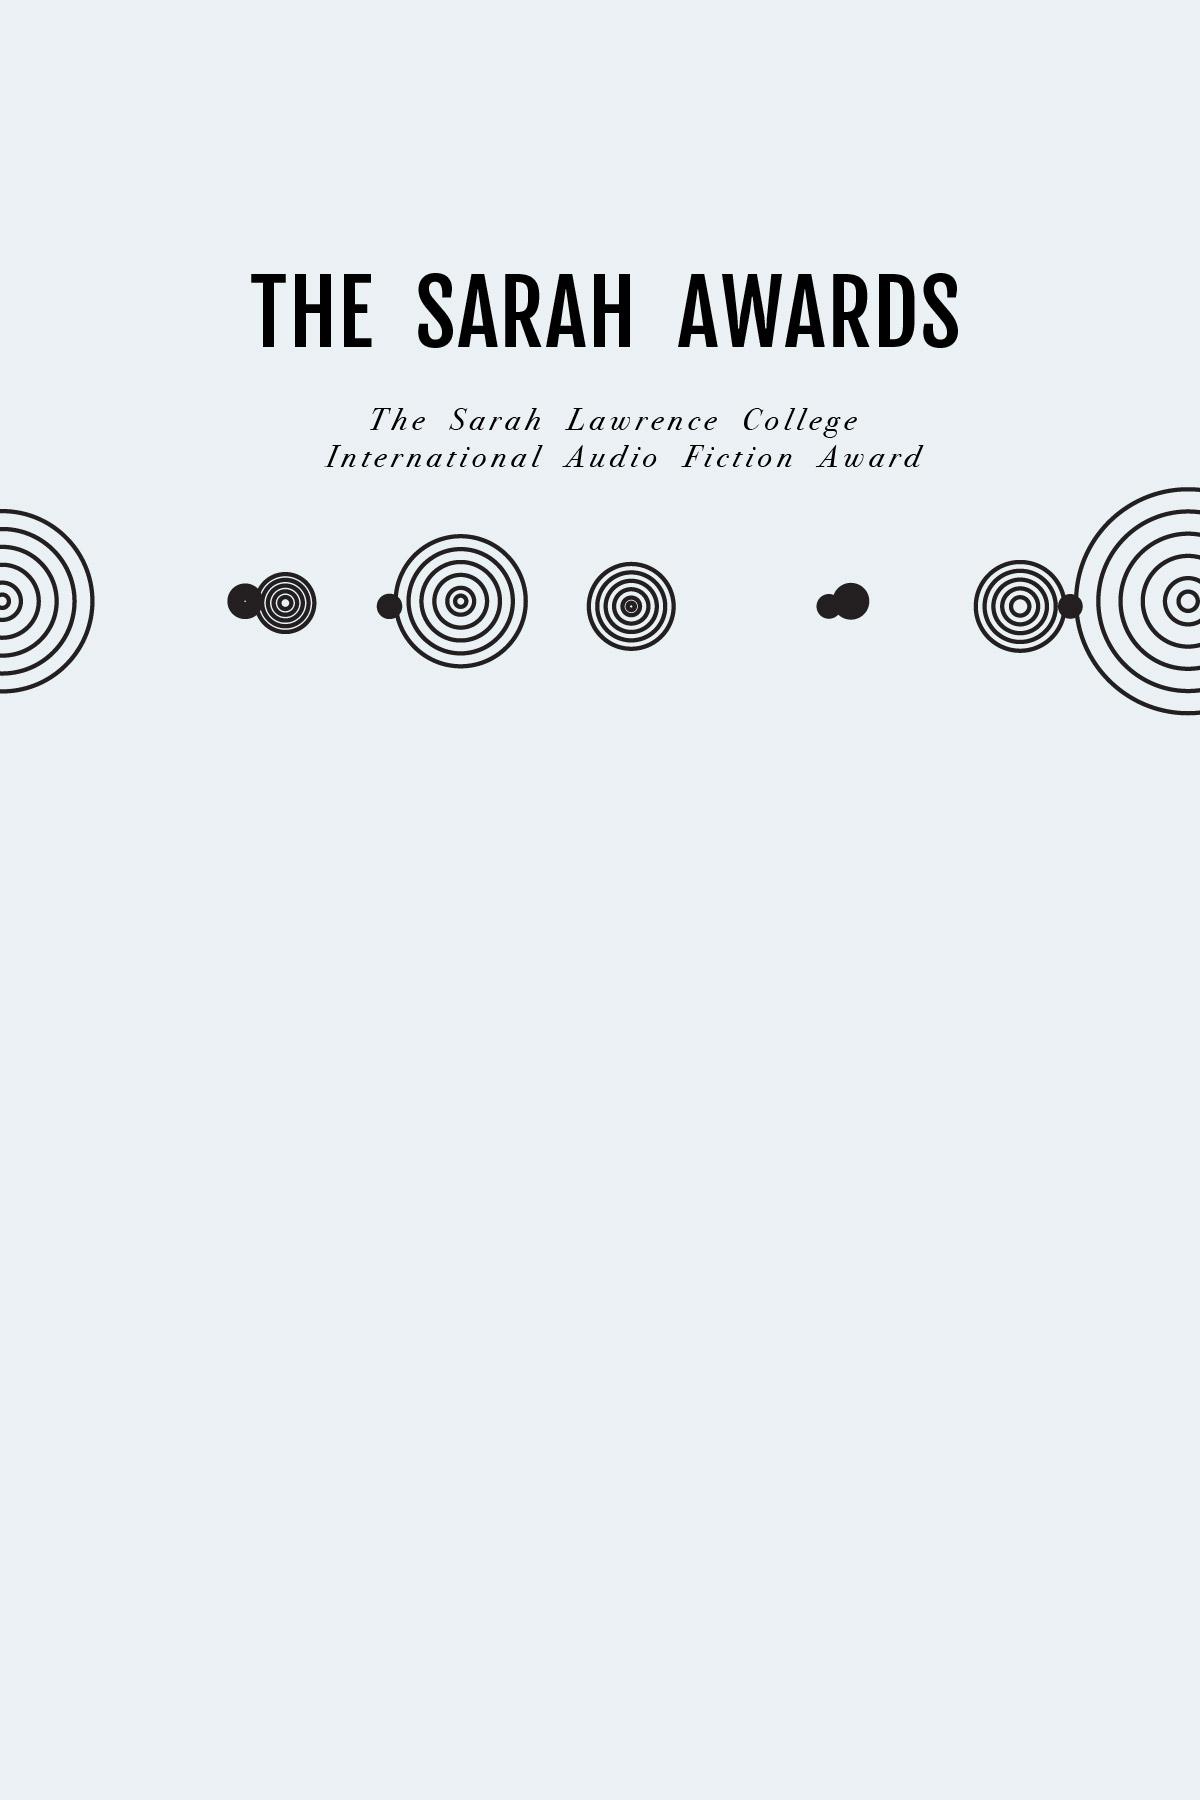 Video Webcast: The Sarah Awards Ceremony